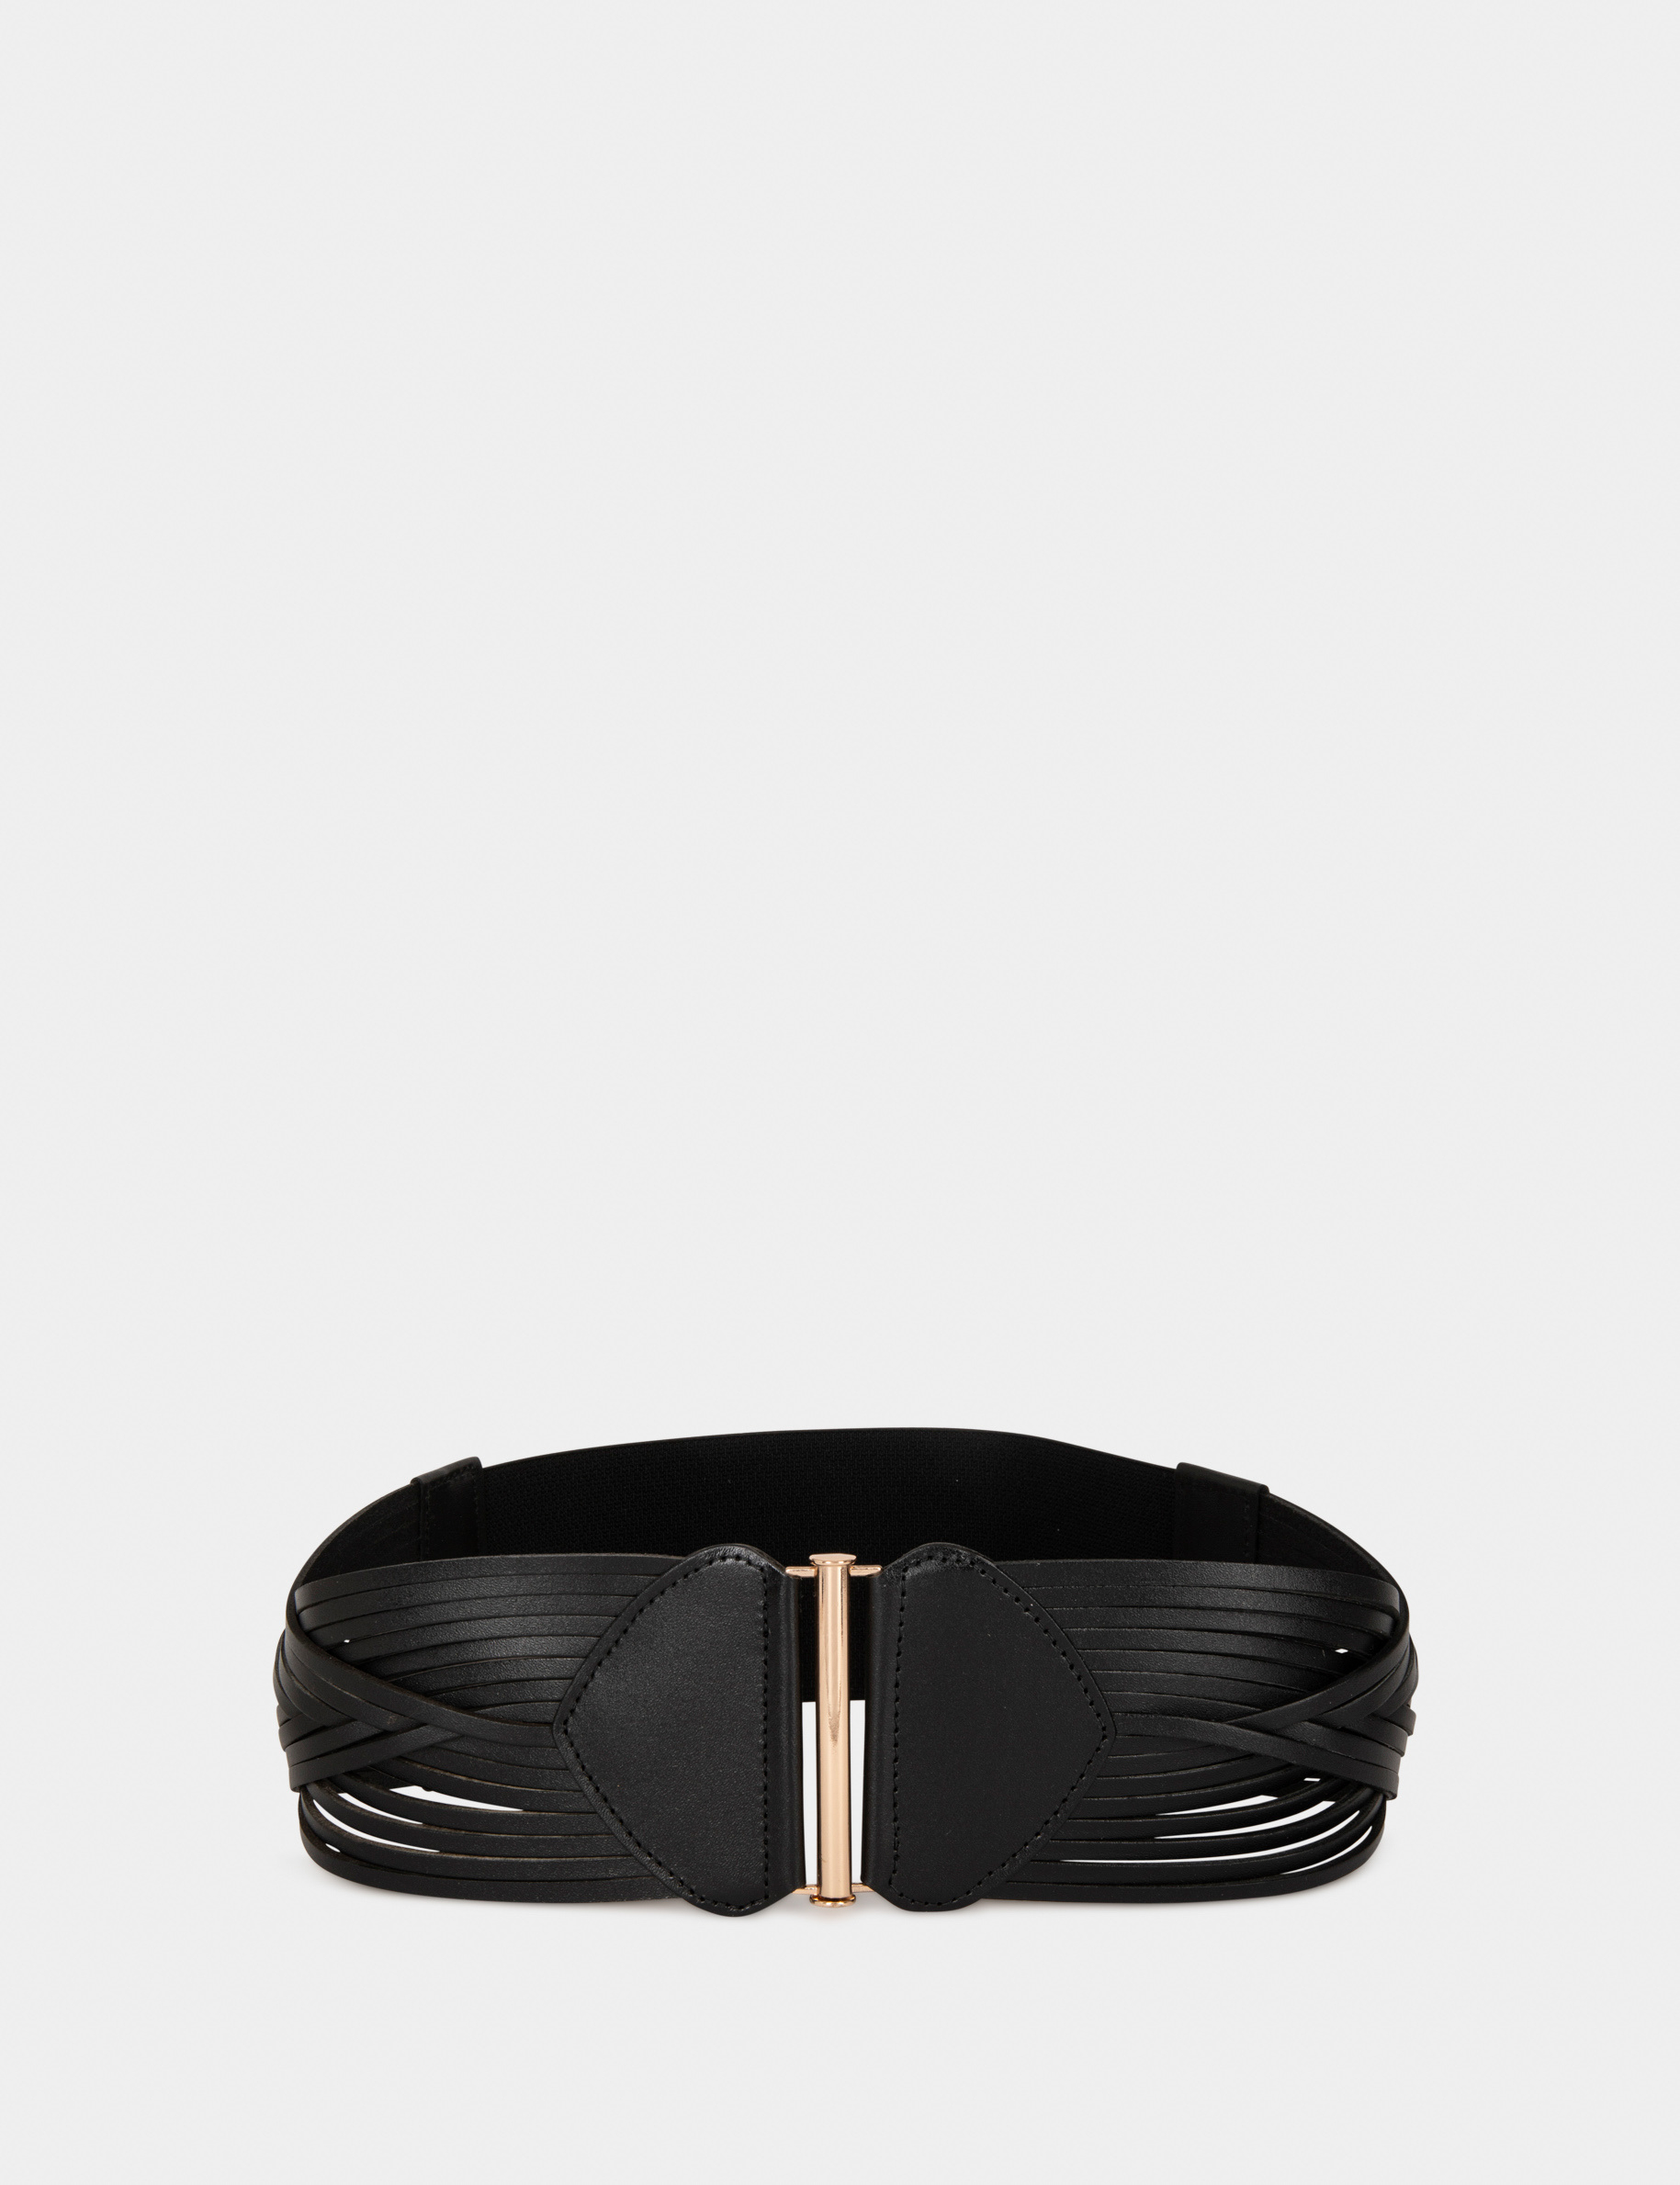 Elasticised leather belt with straps black ladies'